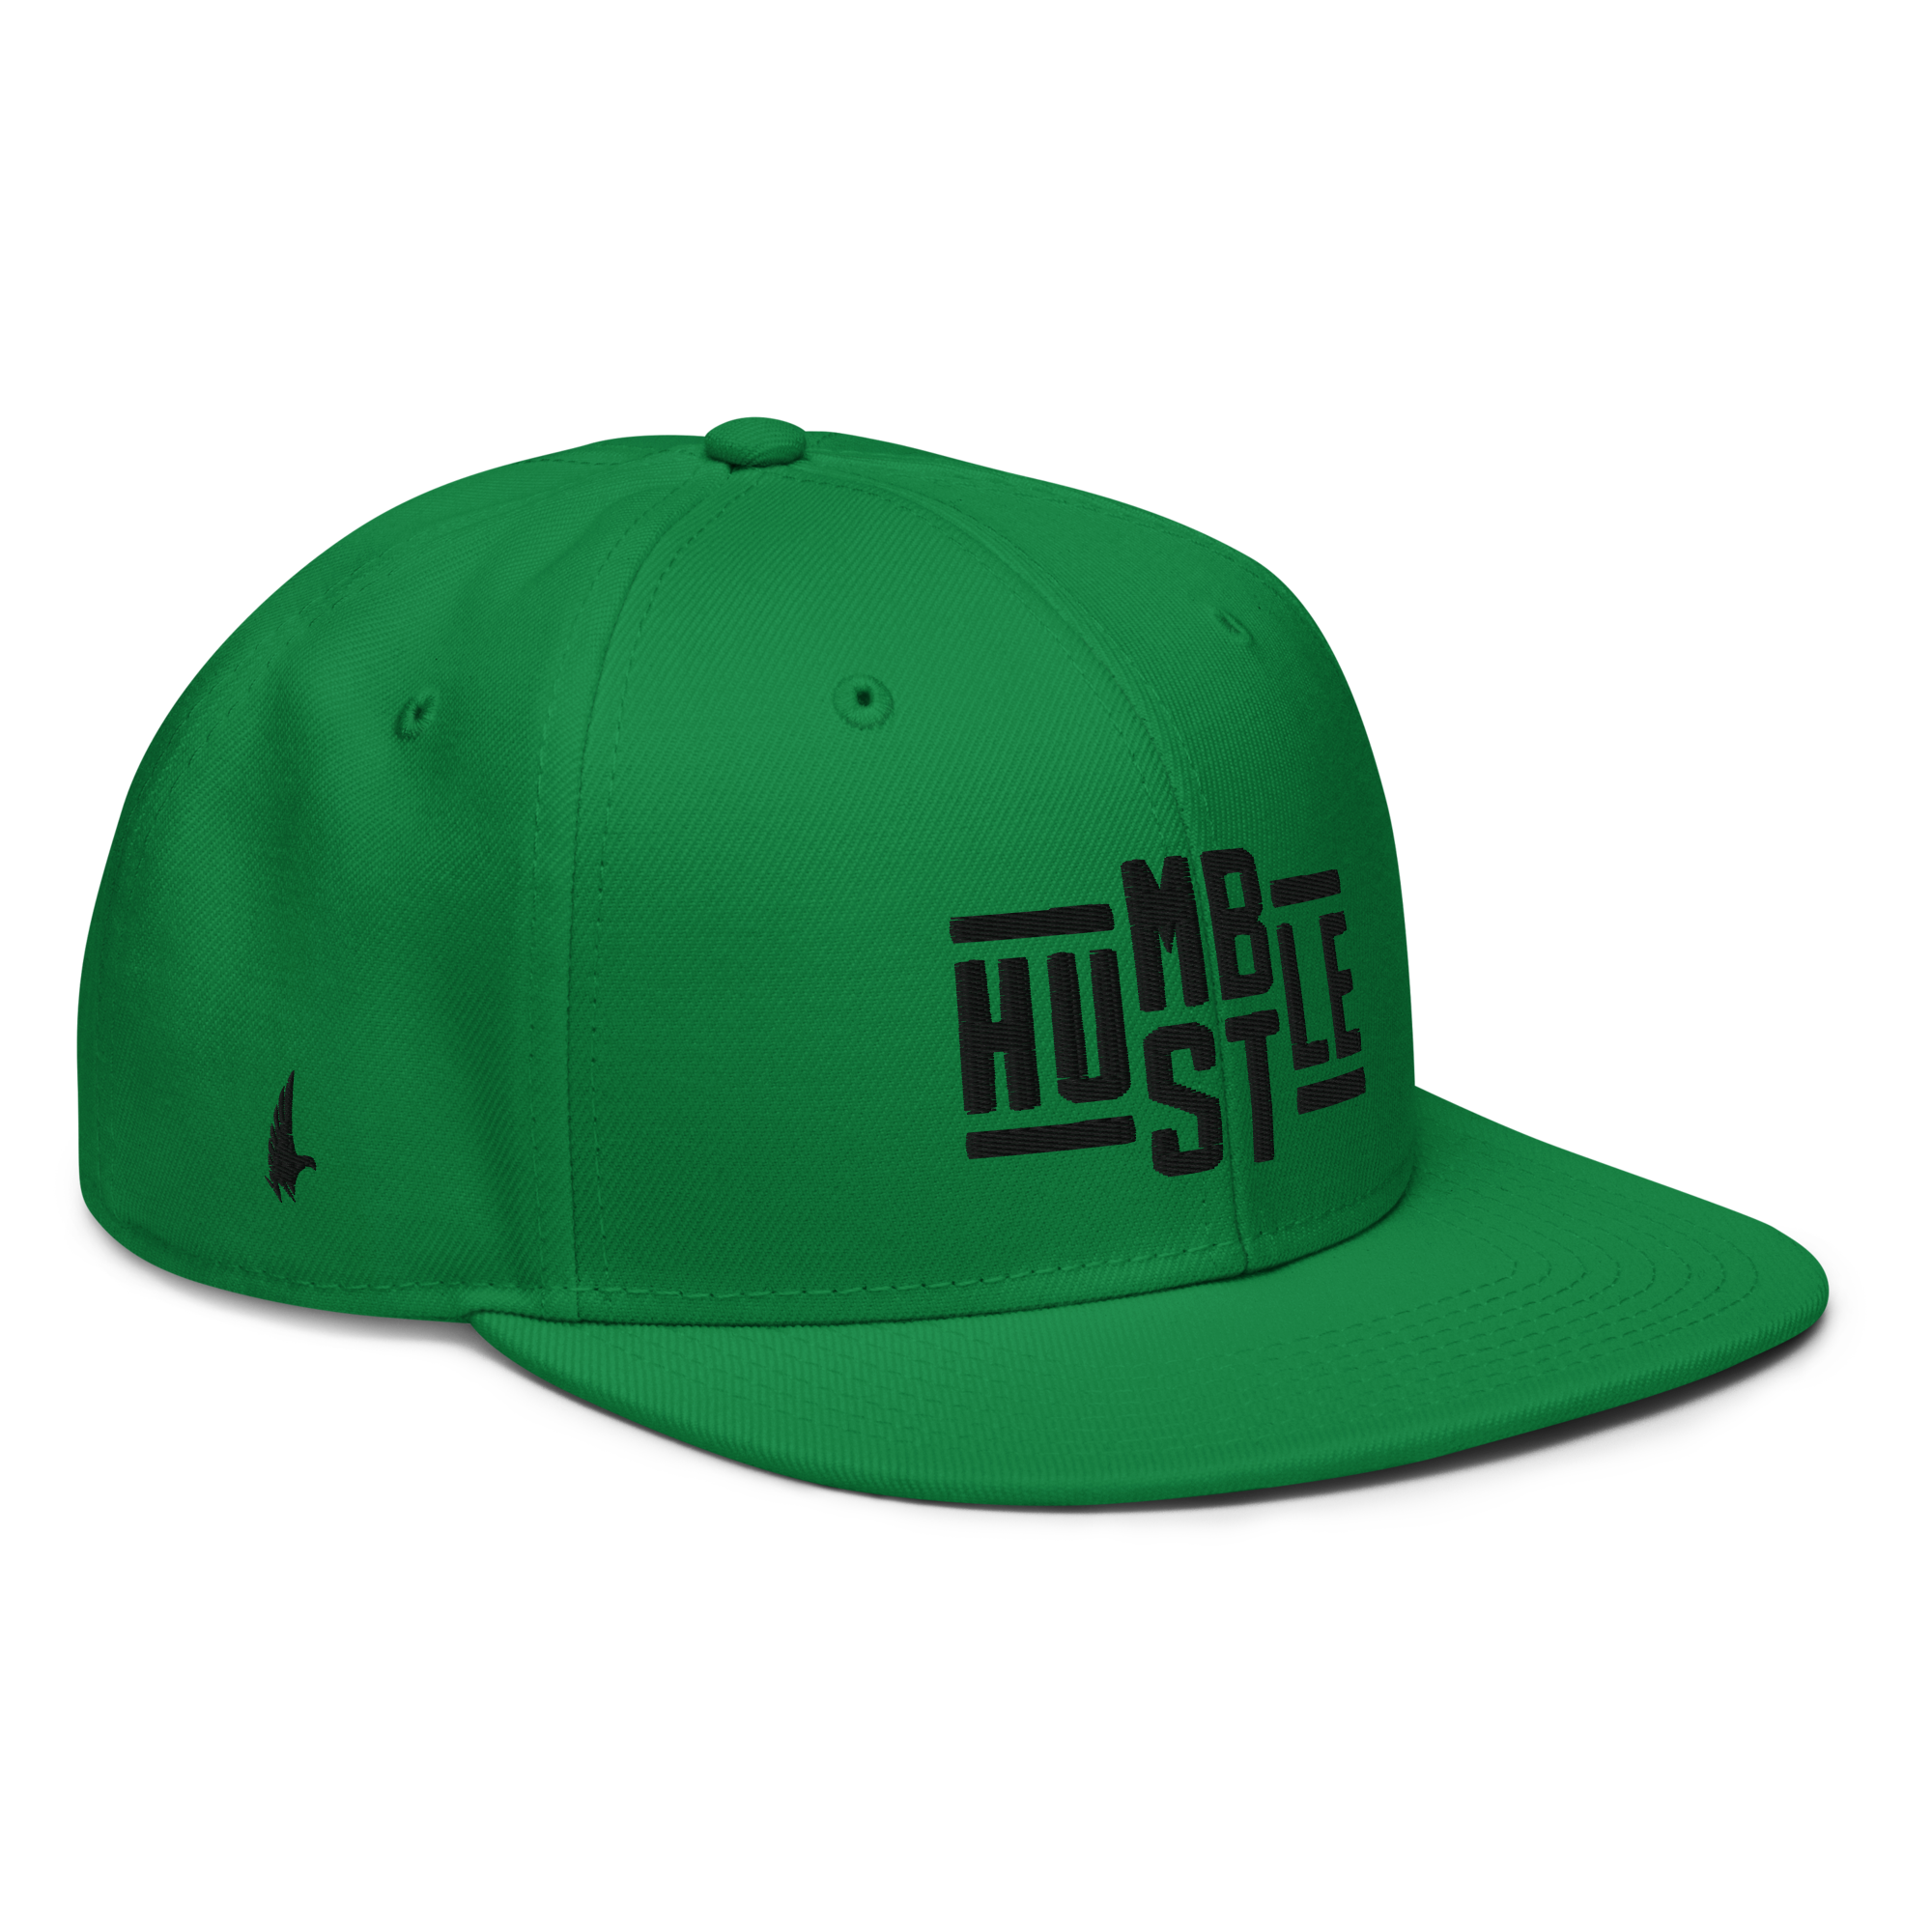 Hustle Snapback Hat - Green/Black OS - Loyalty Vibes